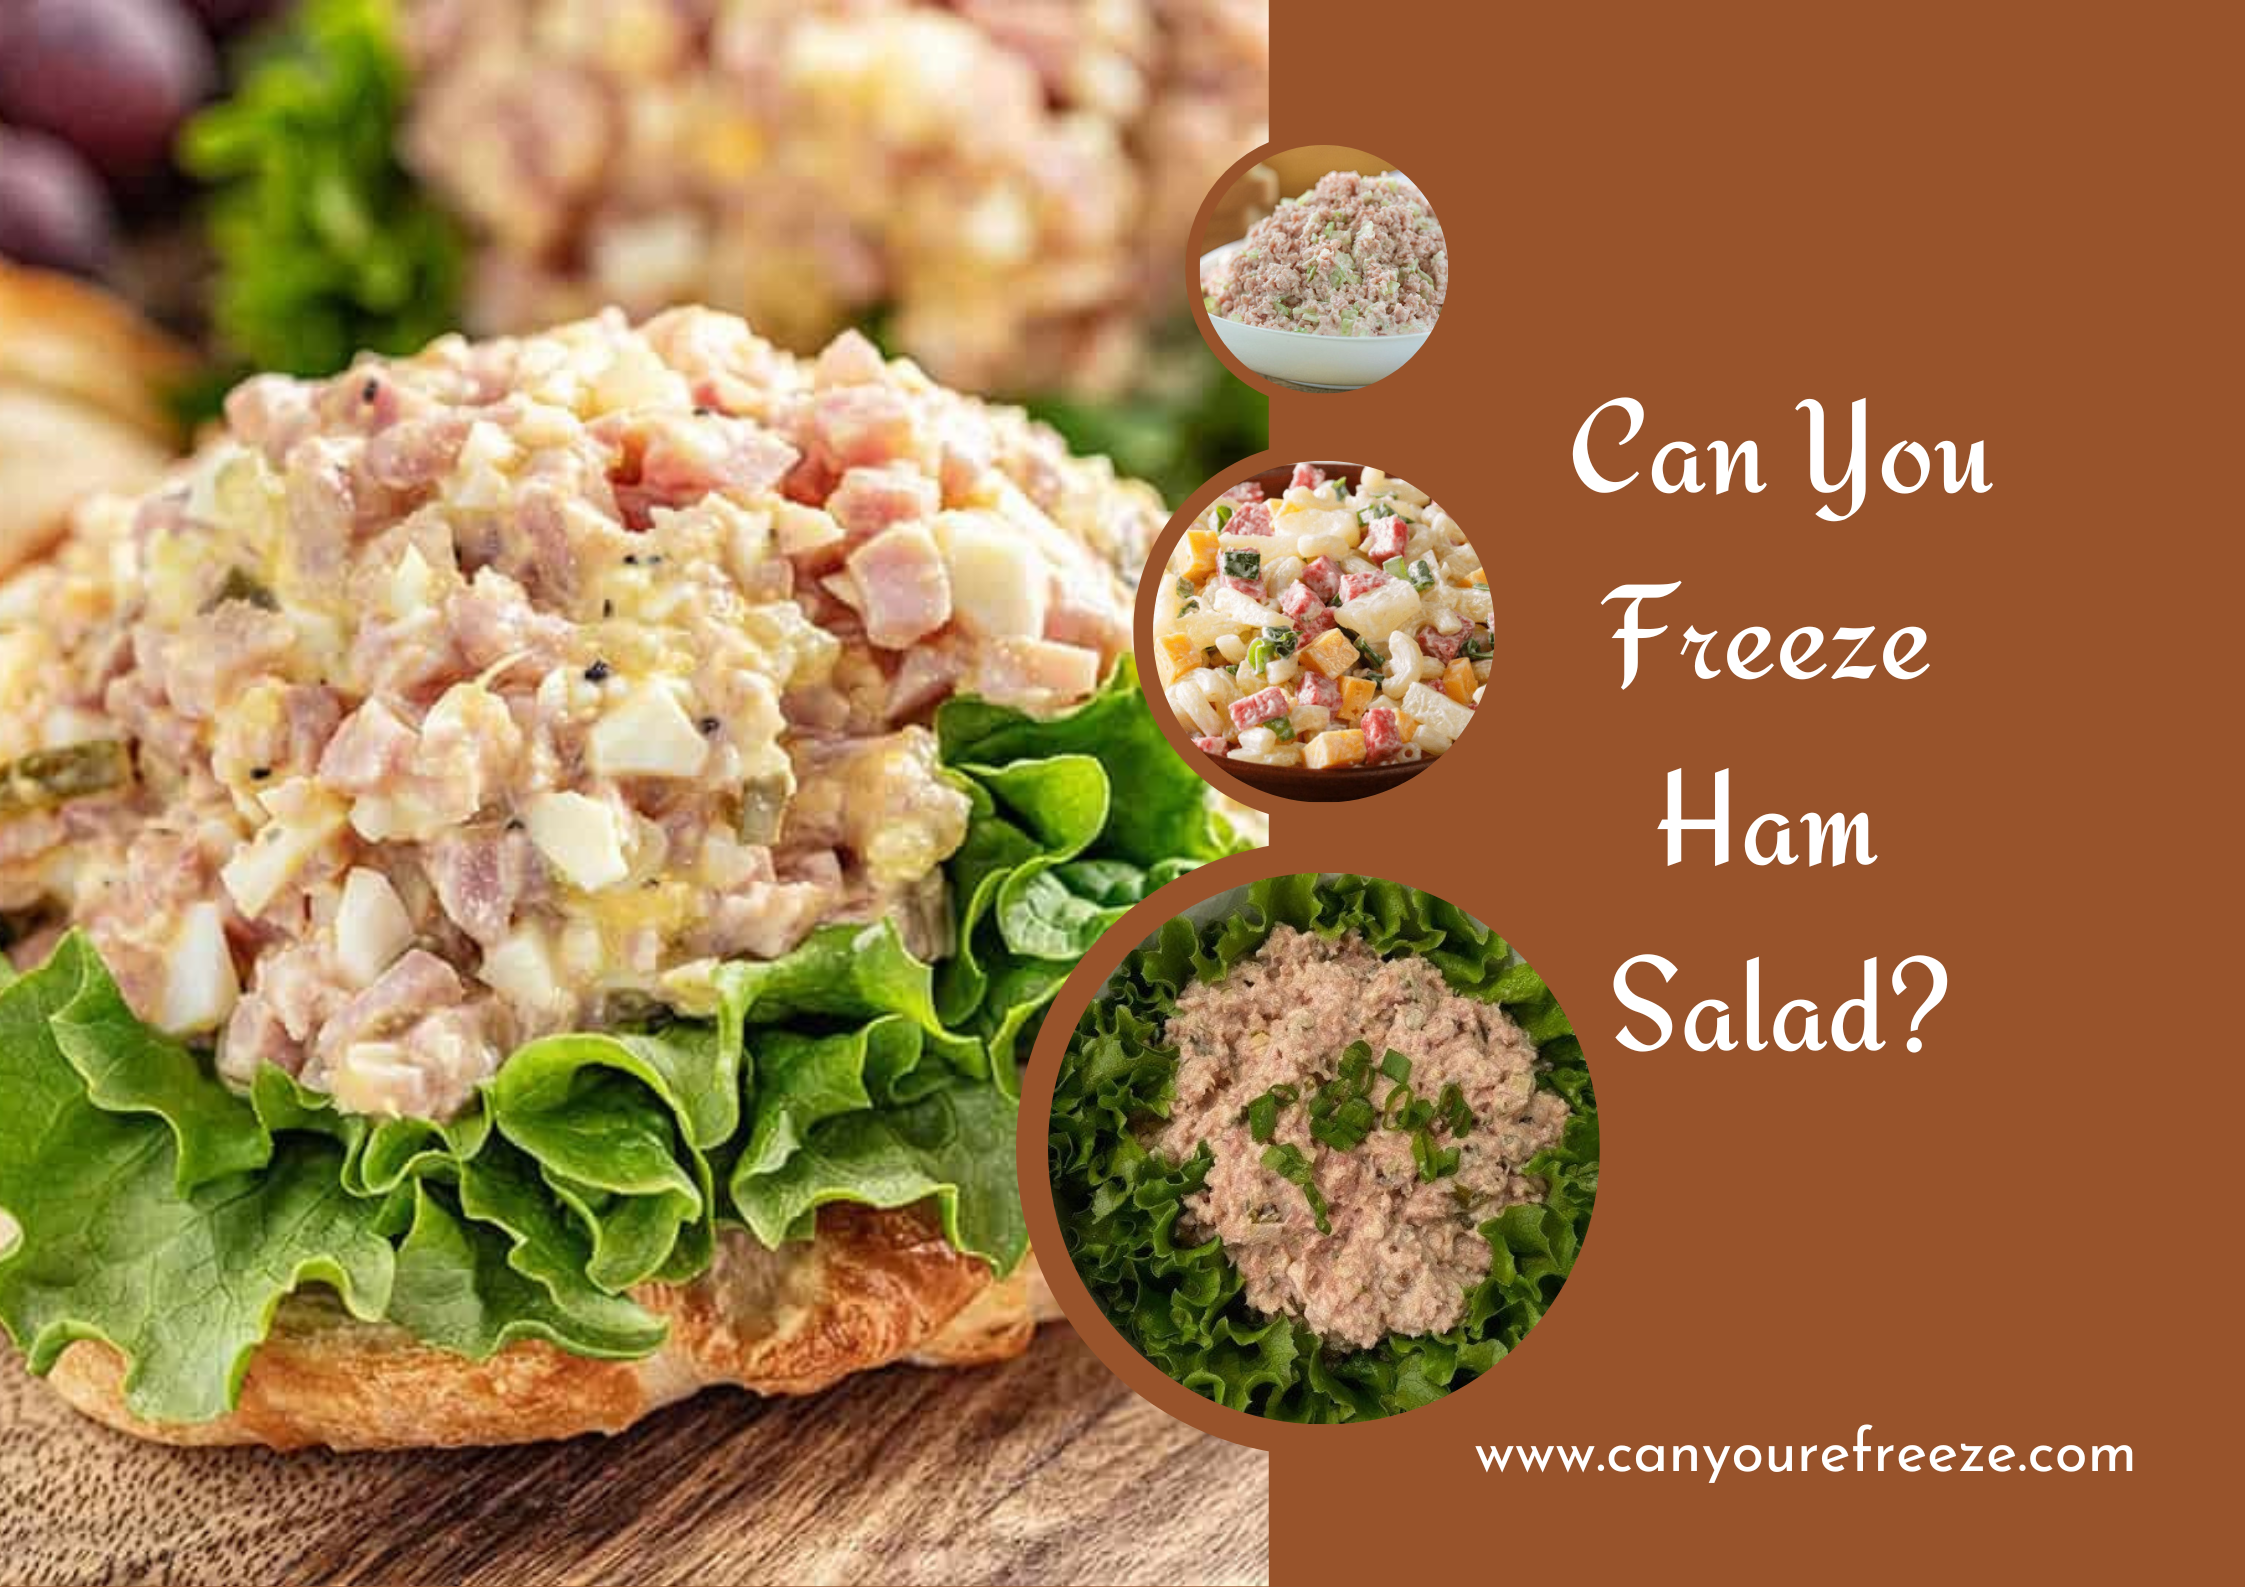 Can You Freeze Ham Salad Recommendations on freezing ham salad!